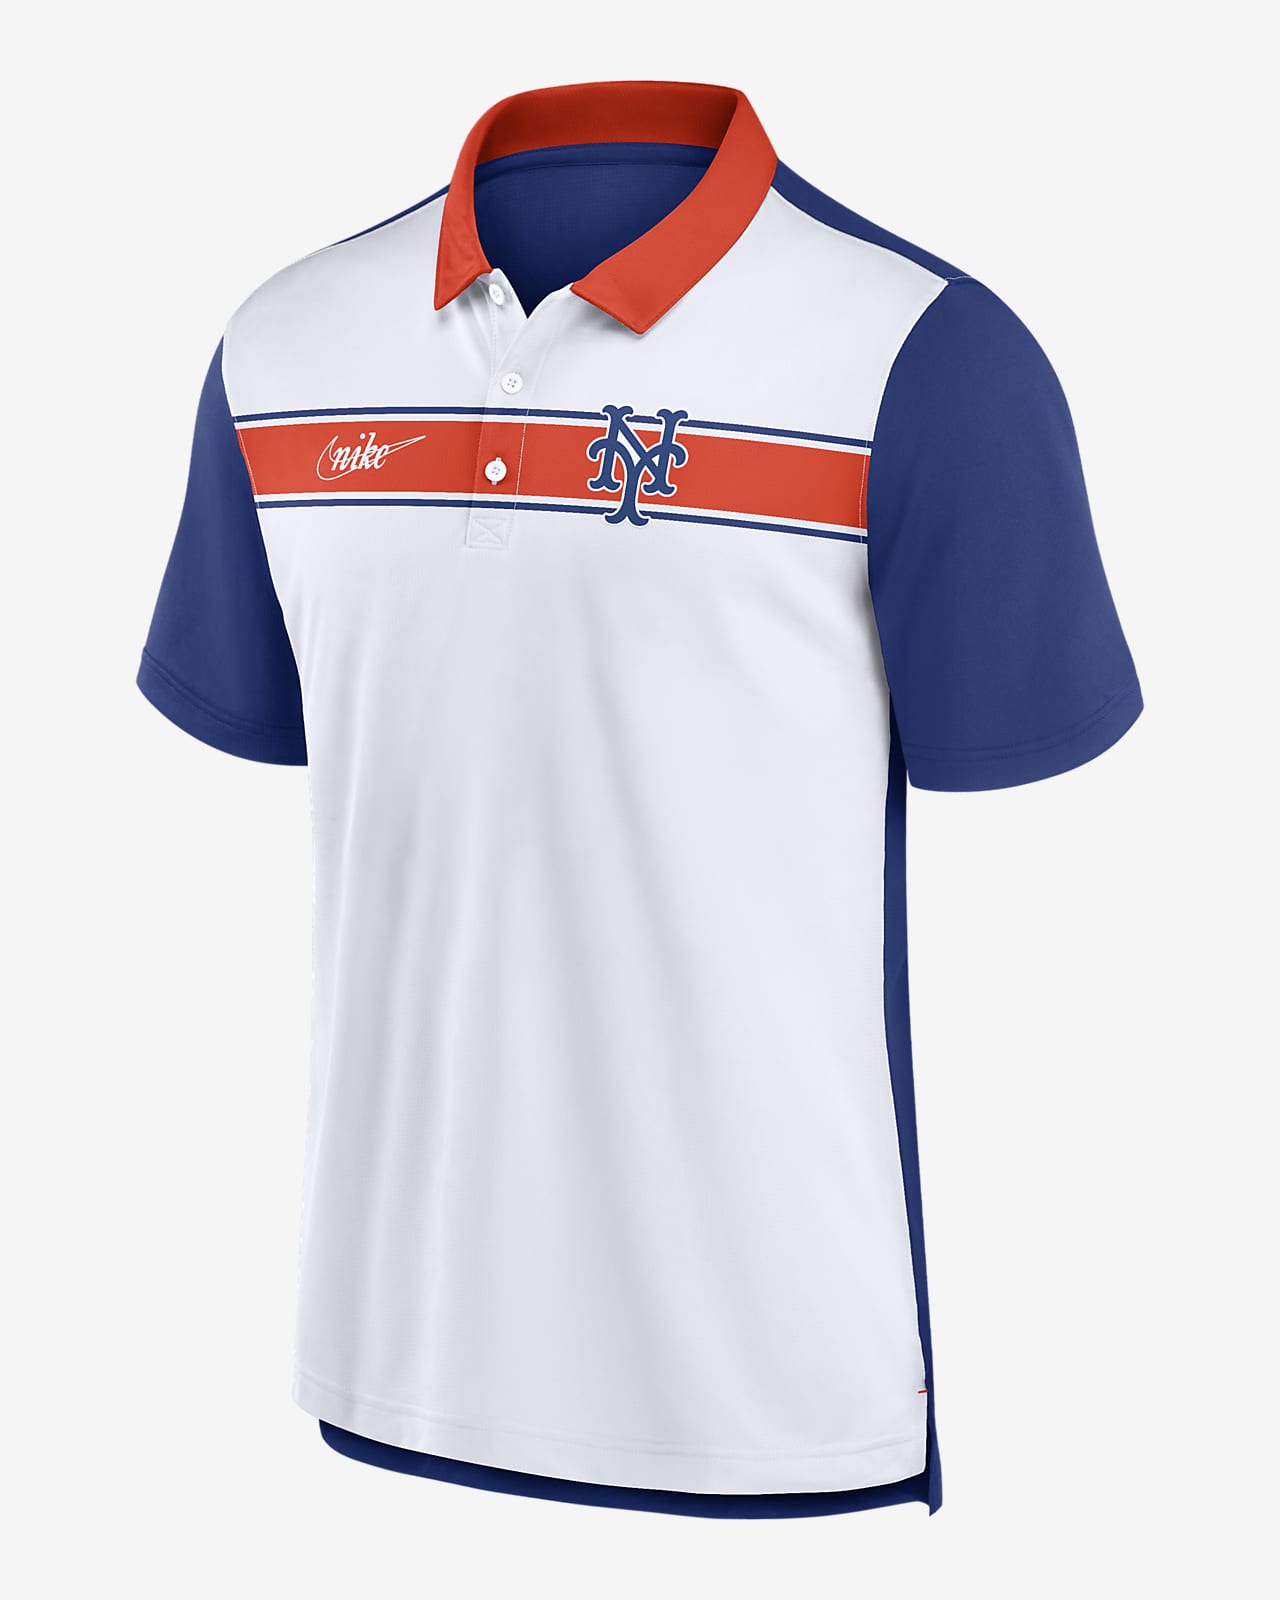 Nike Rewind Colors (MLB New York Mets) Men's 3/4-Sleeve T-Shirt.